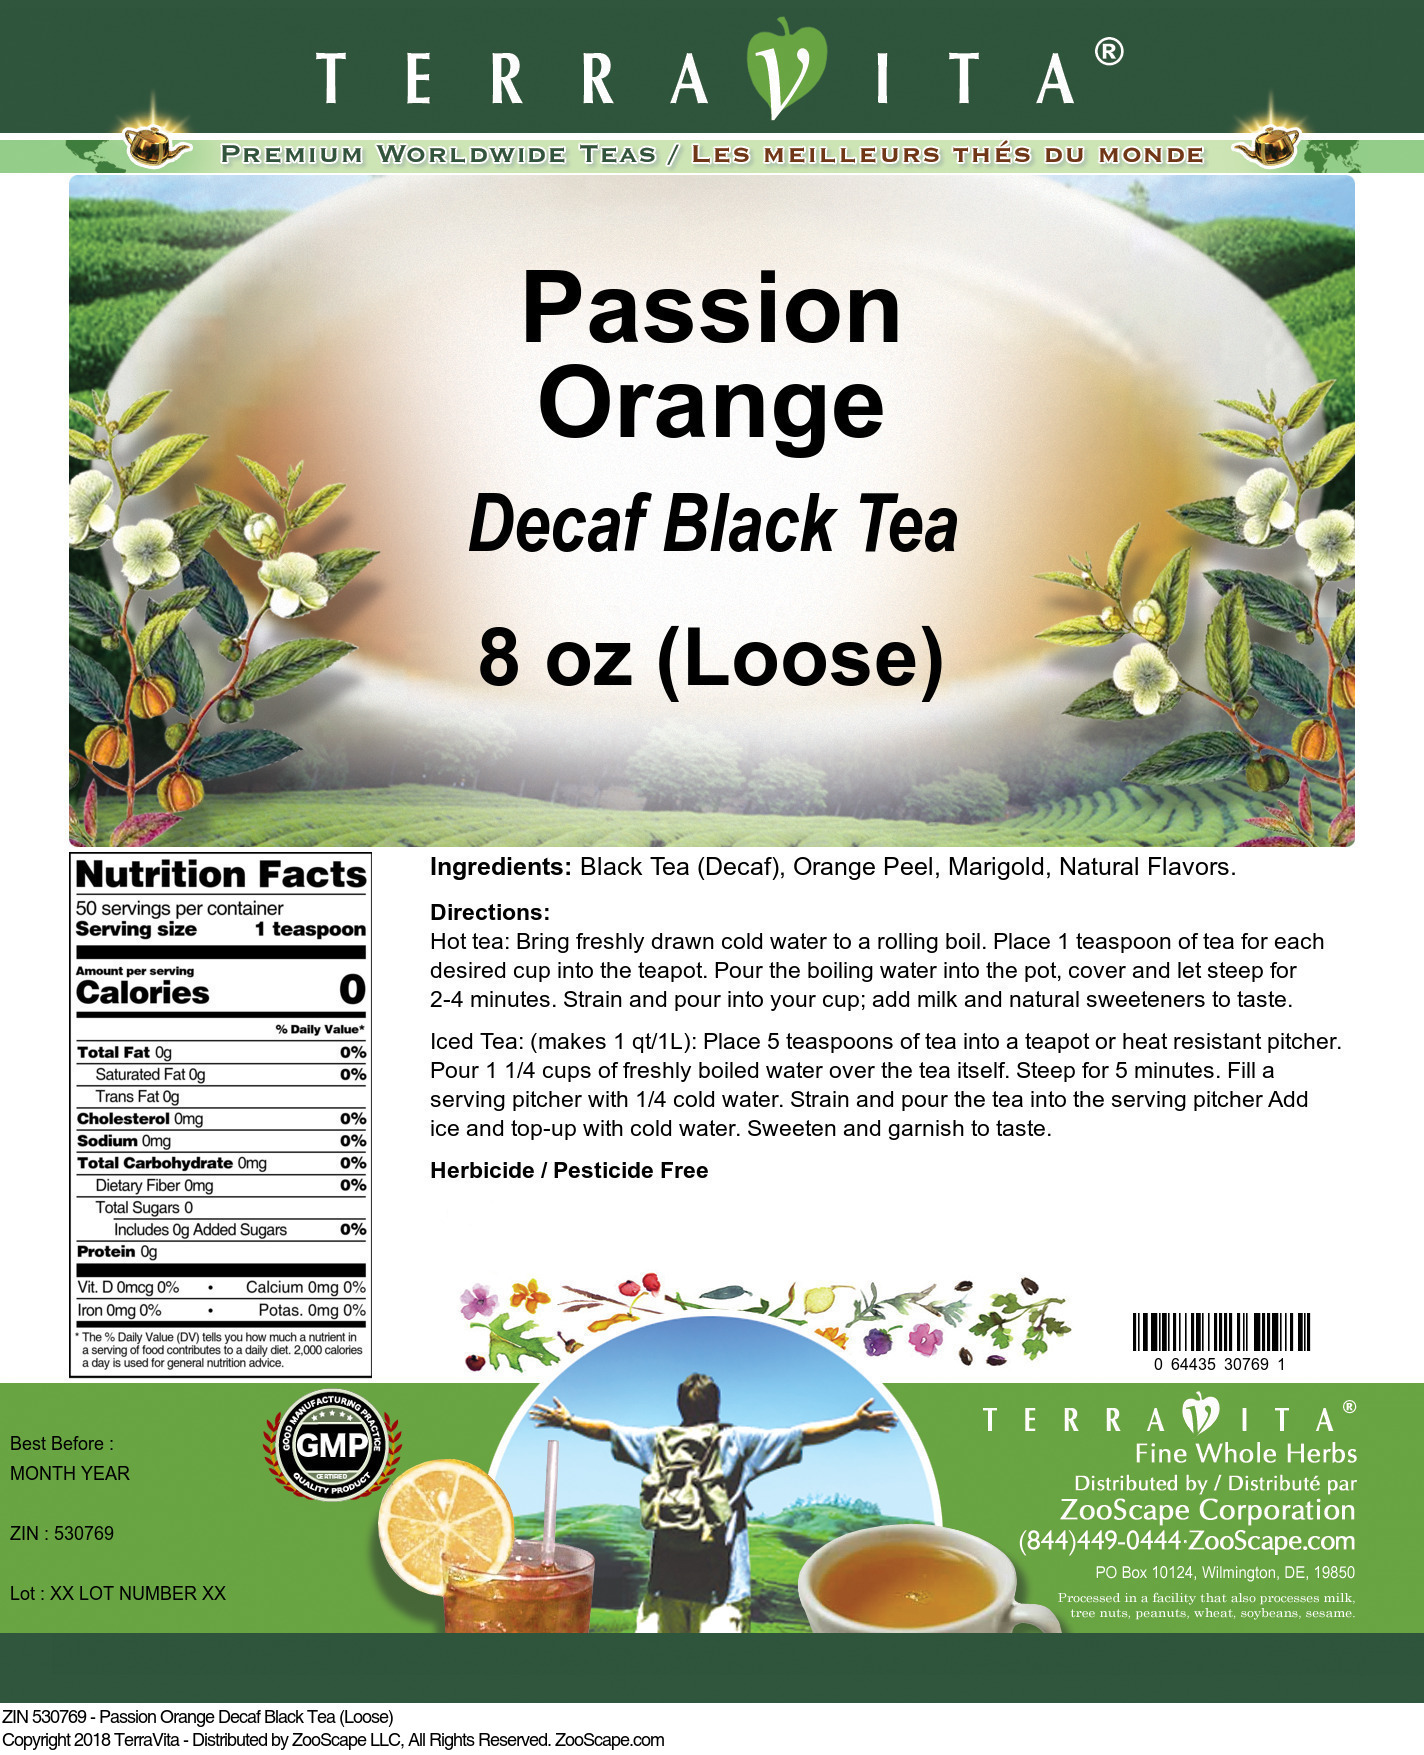 Passion Orange Decaf Black Tea (Loose) - Label